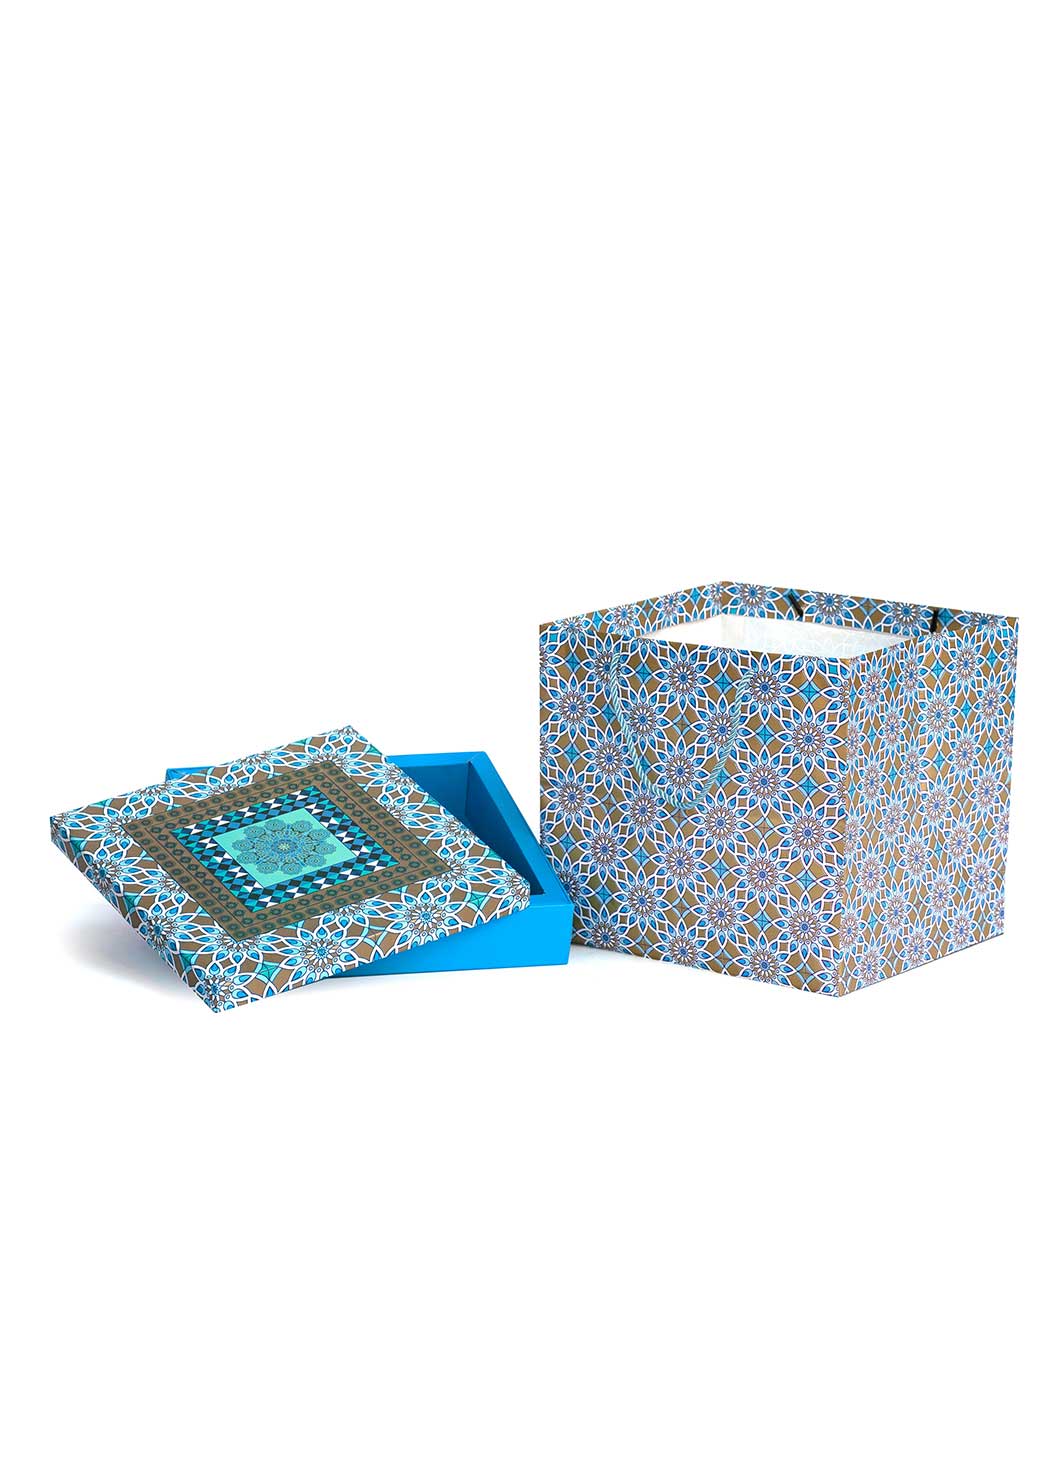 2KG Golden & Persian Blue Design Box for Packing Sweet Box